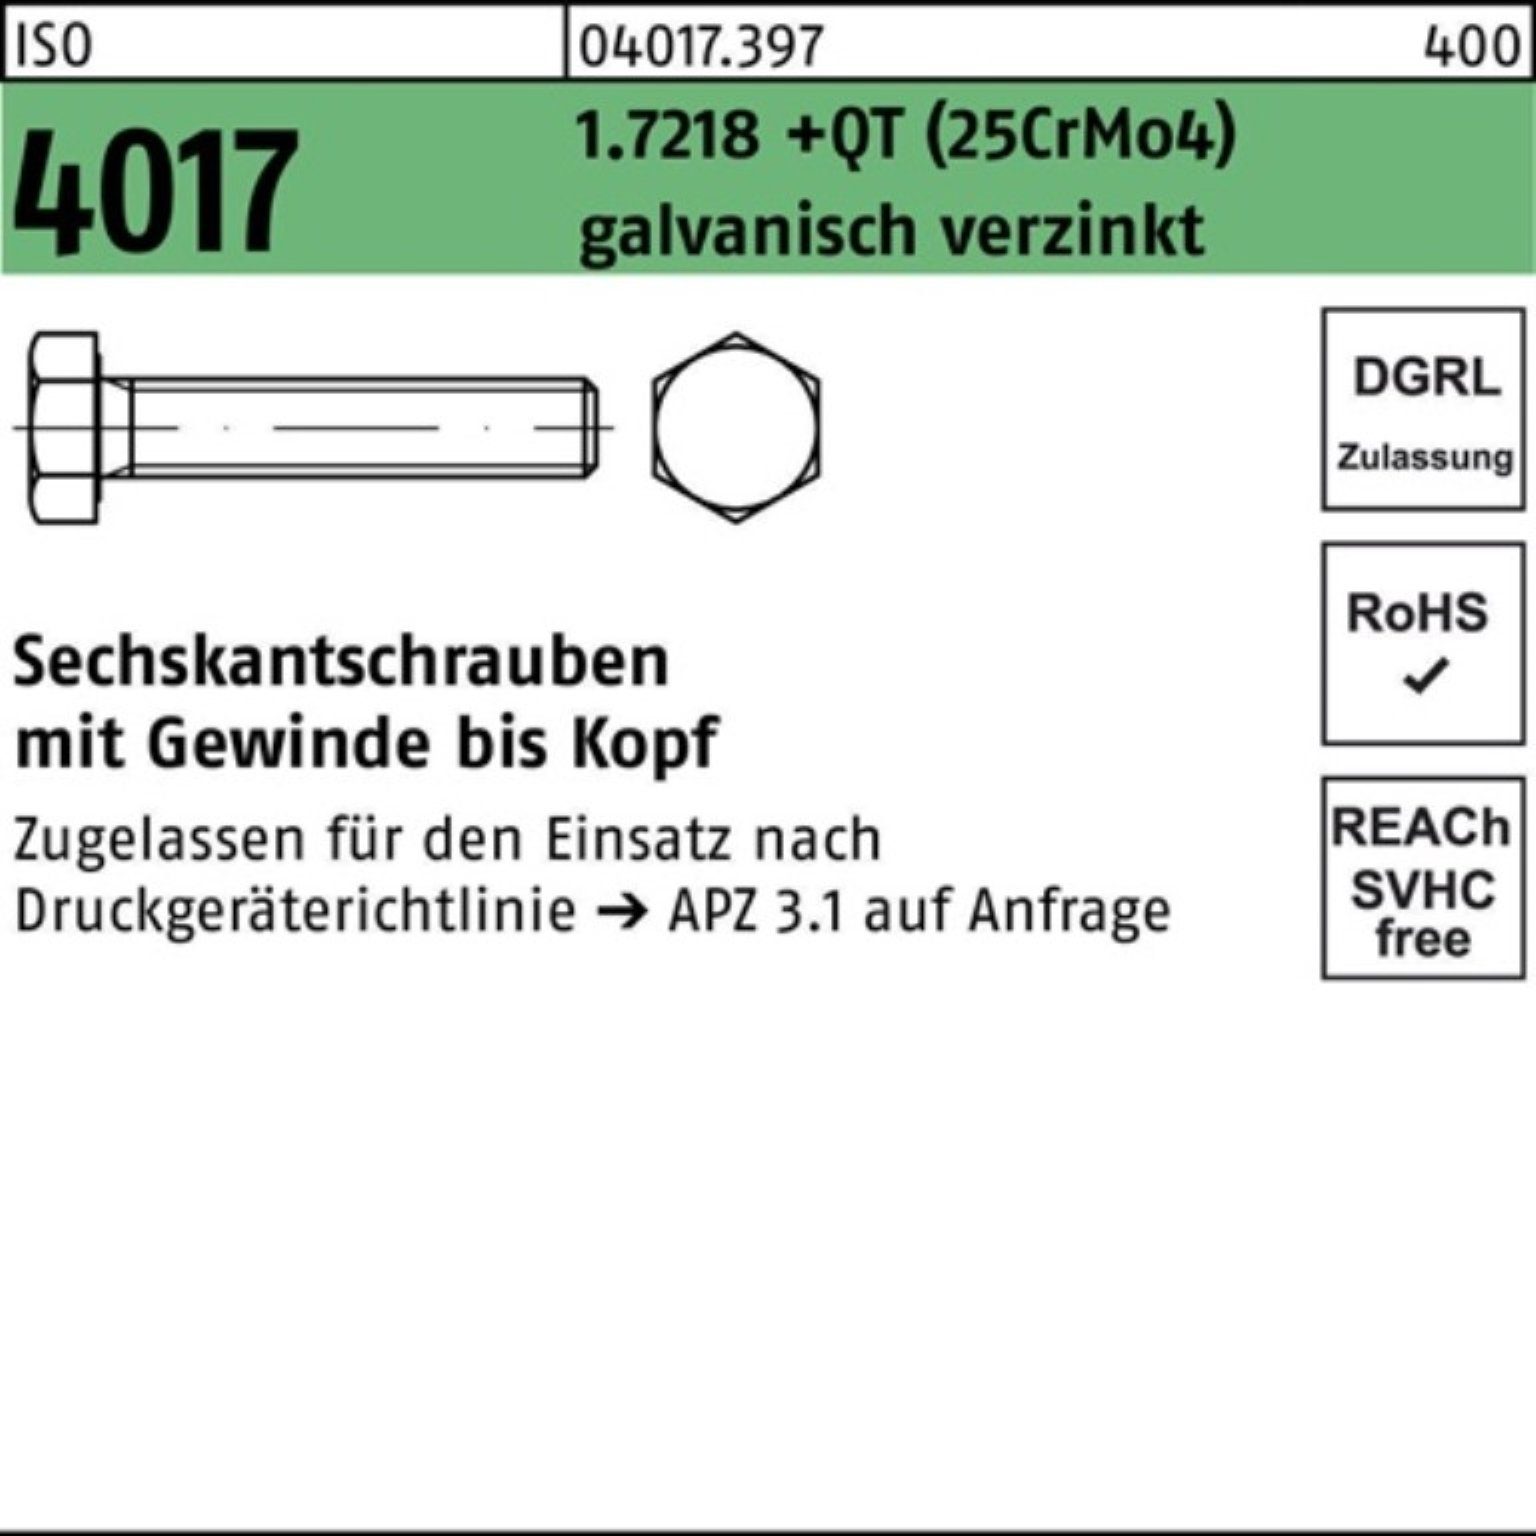 Bufab Sechskantschraube 100er Sechskantschraube (25CrMo4) 1.7218 g 4017 VG +QT ISO M20x45 Pack